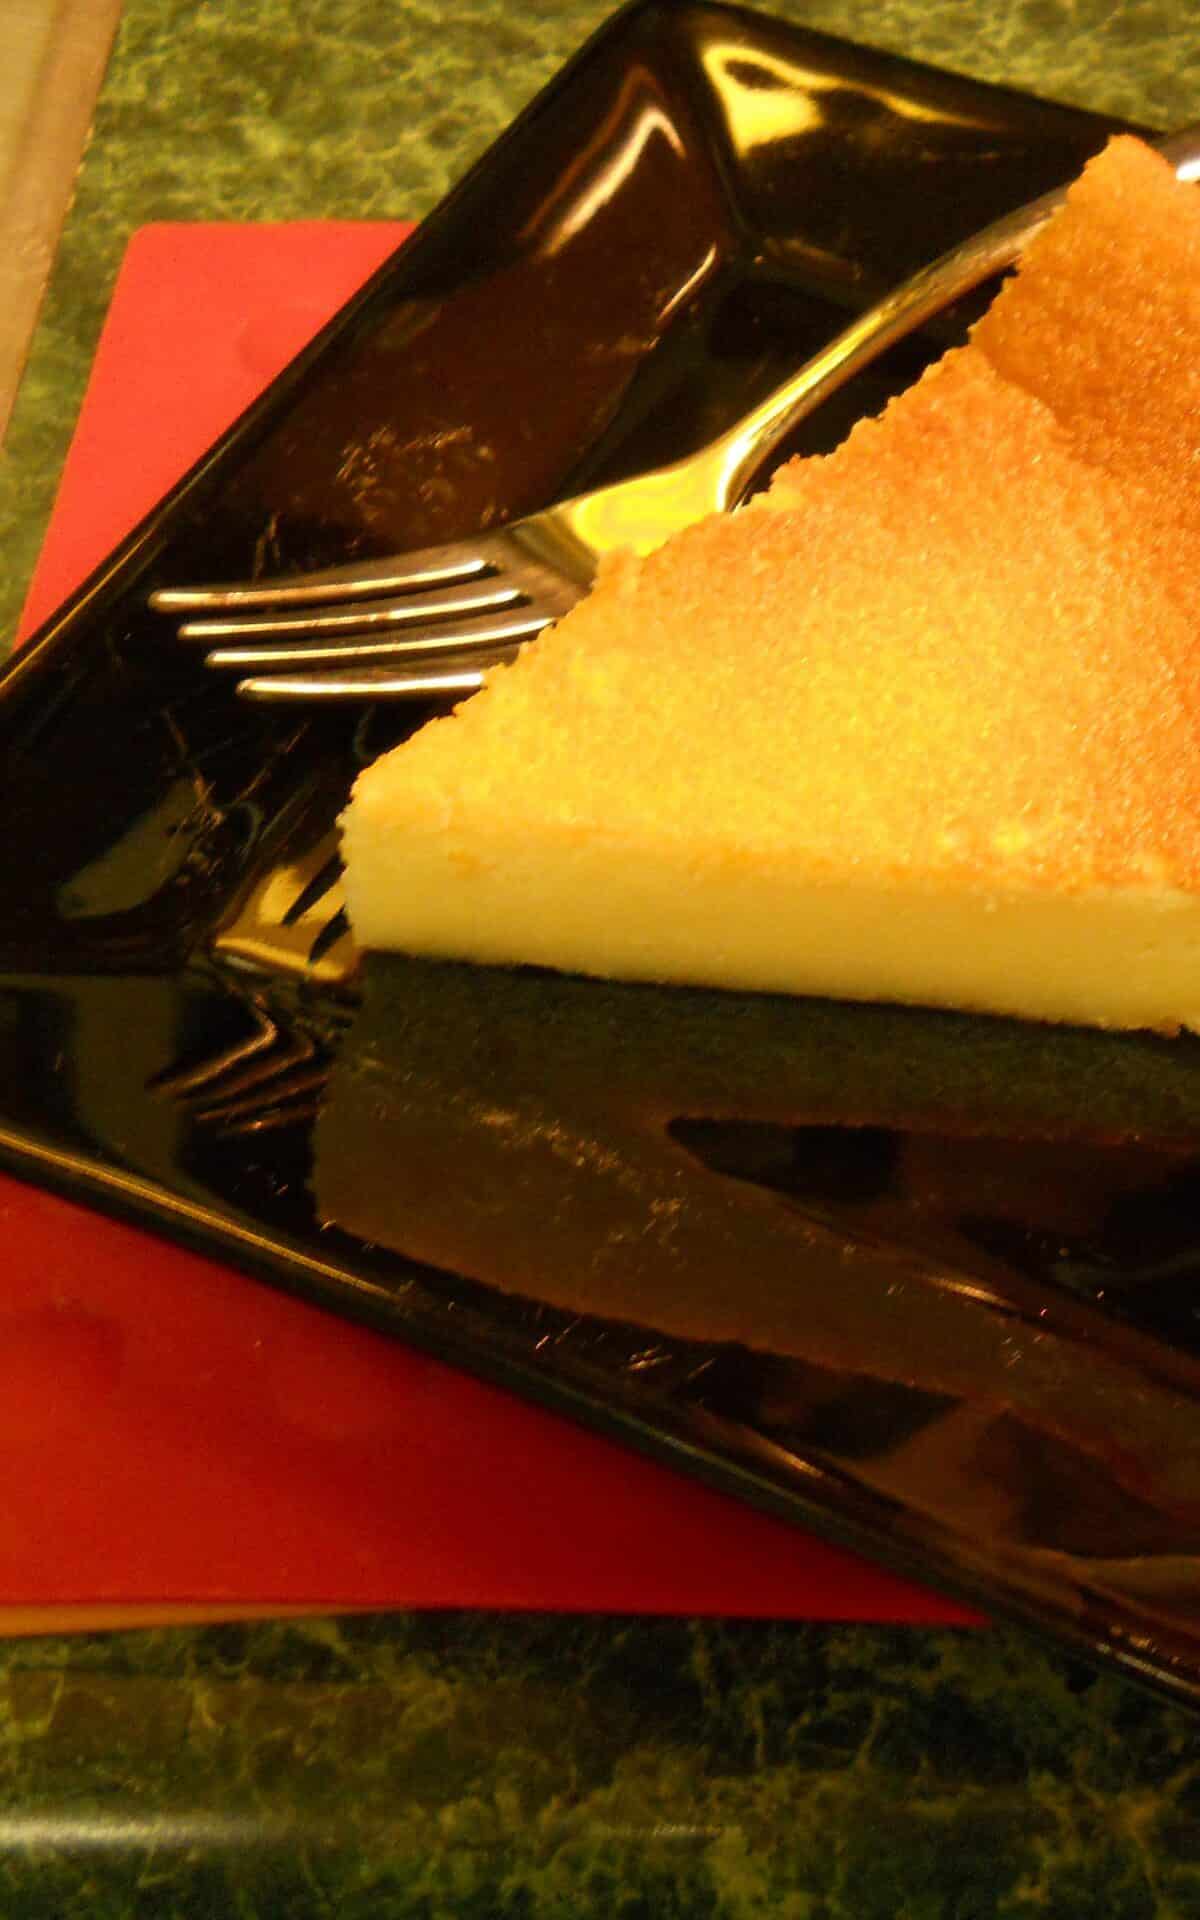 Sure, here are 11 unique photo captions for the No Crust Buttermilk Pie recipe: